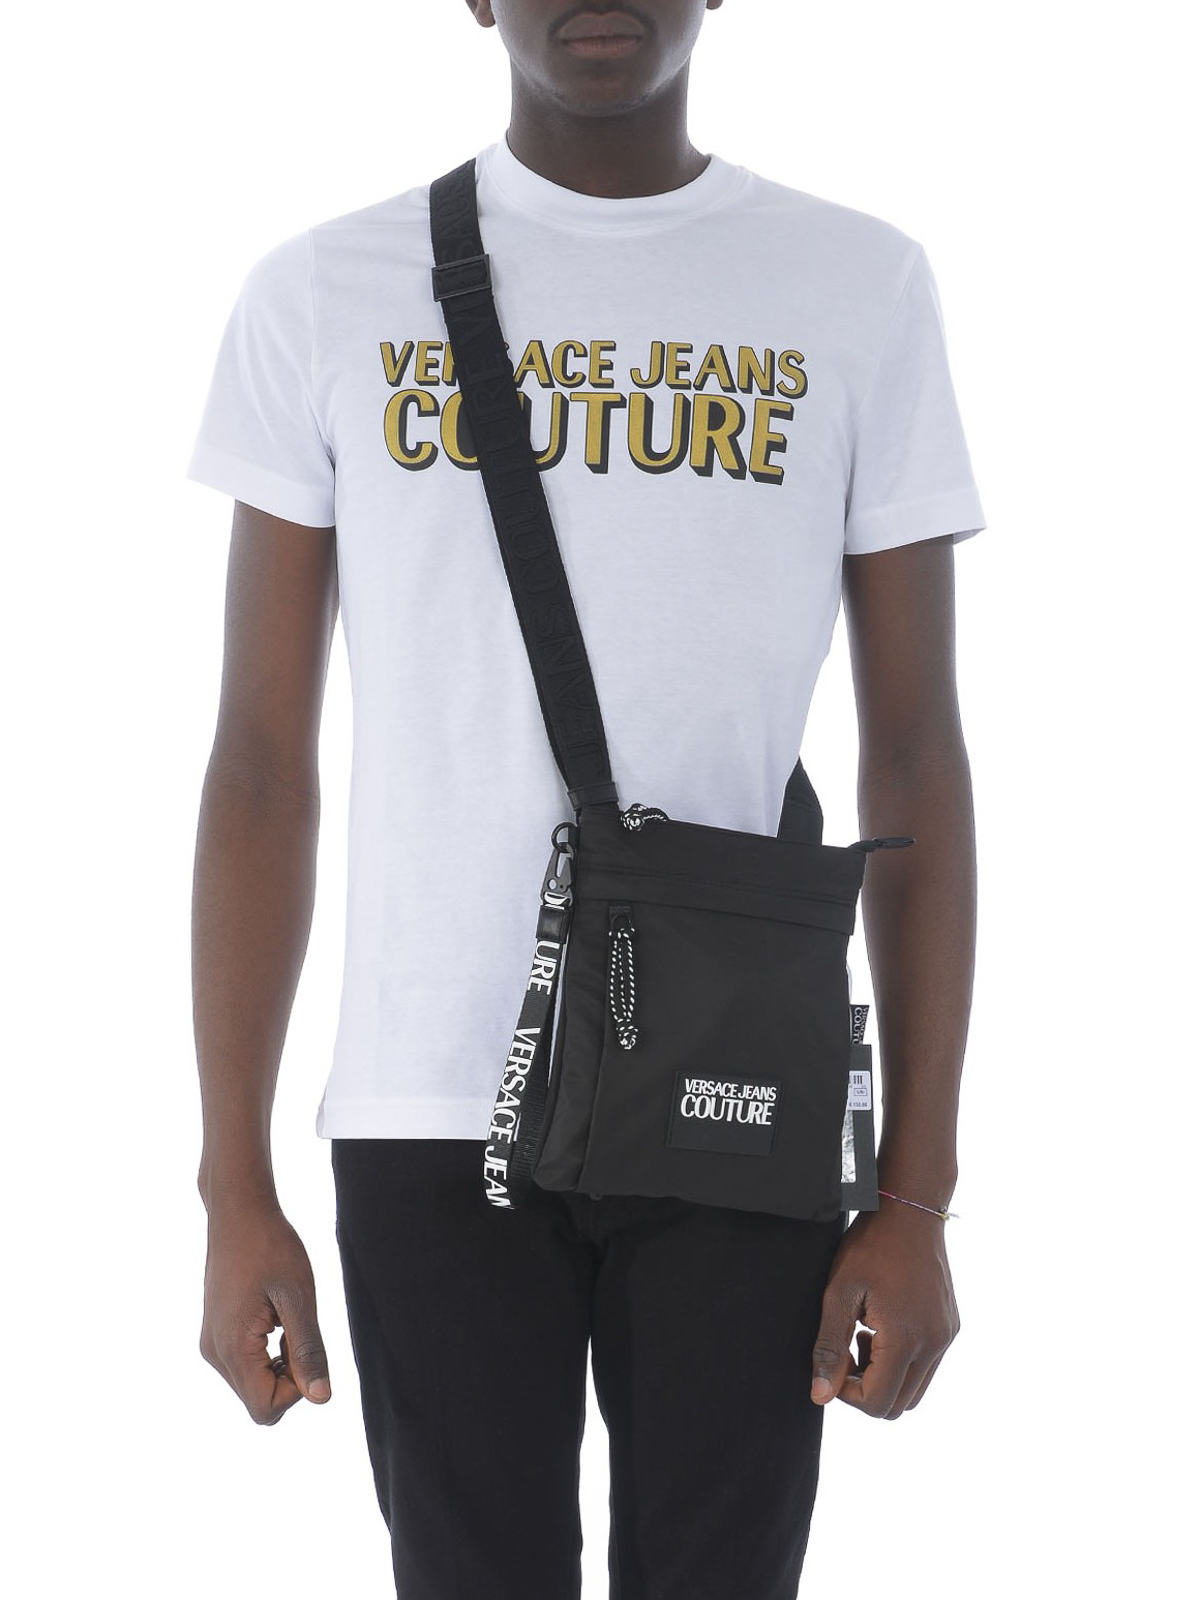 versace jeans messenger bag